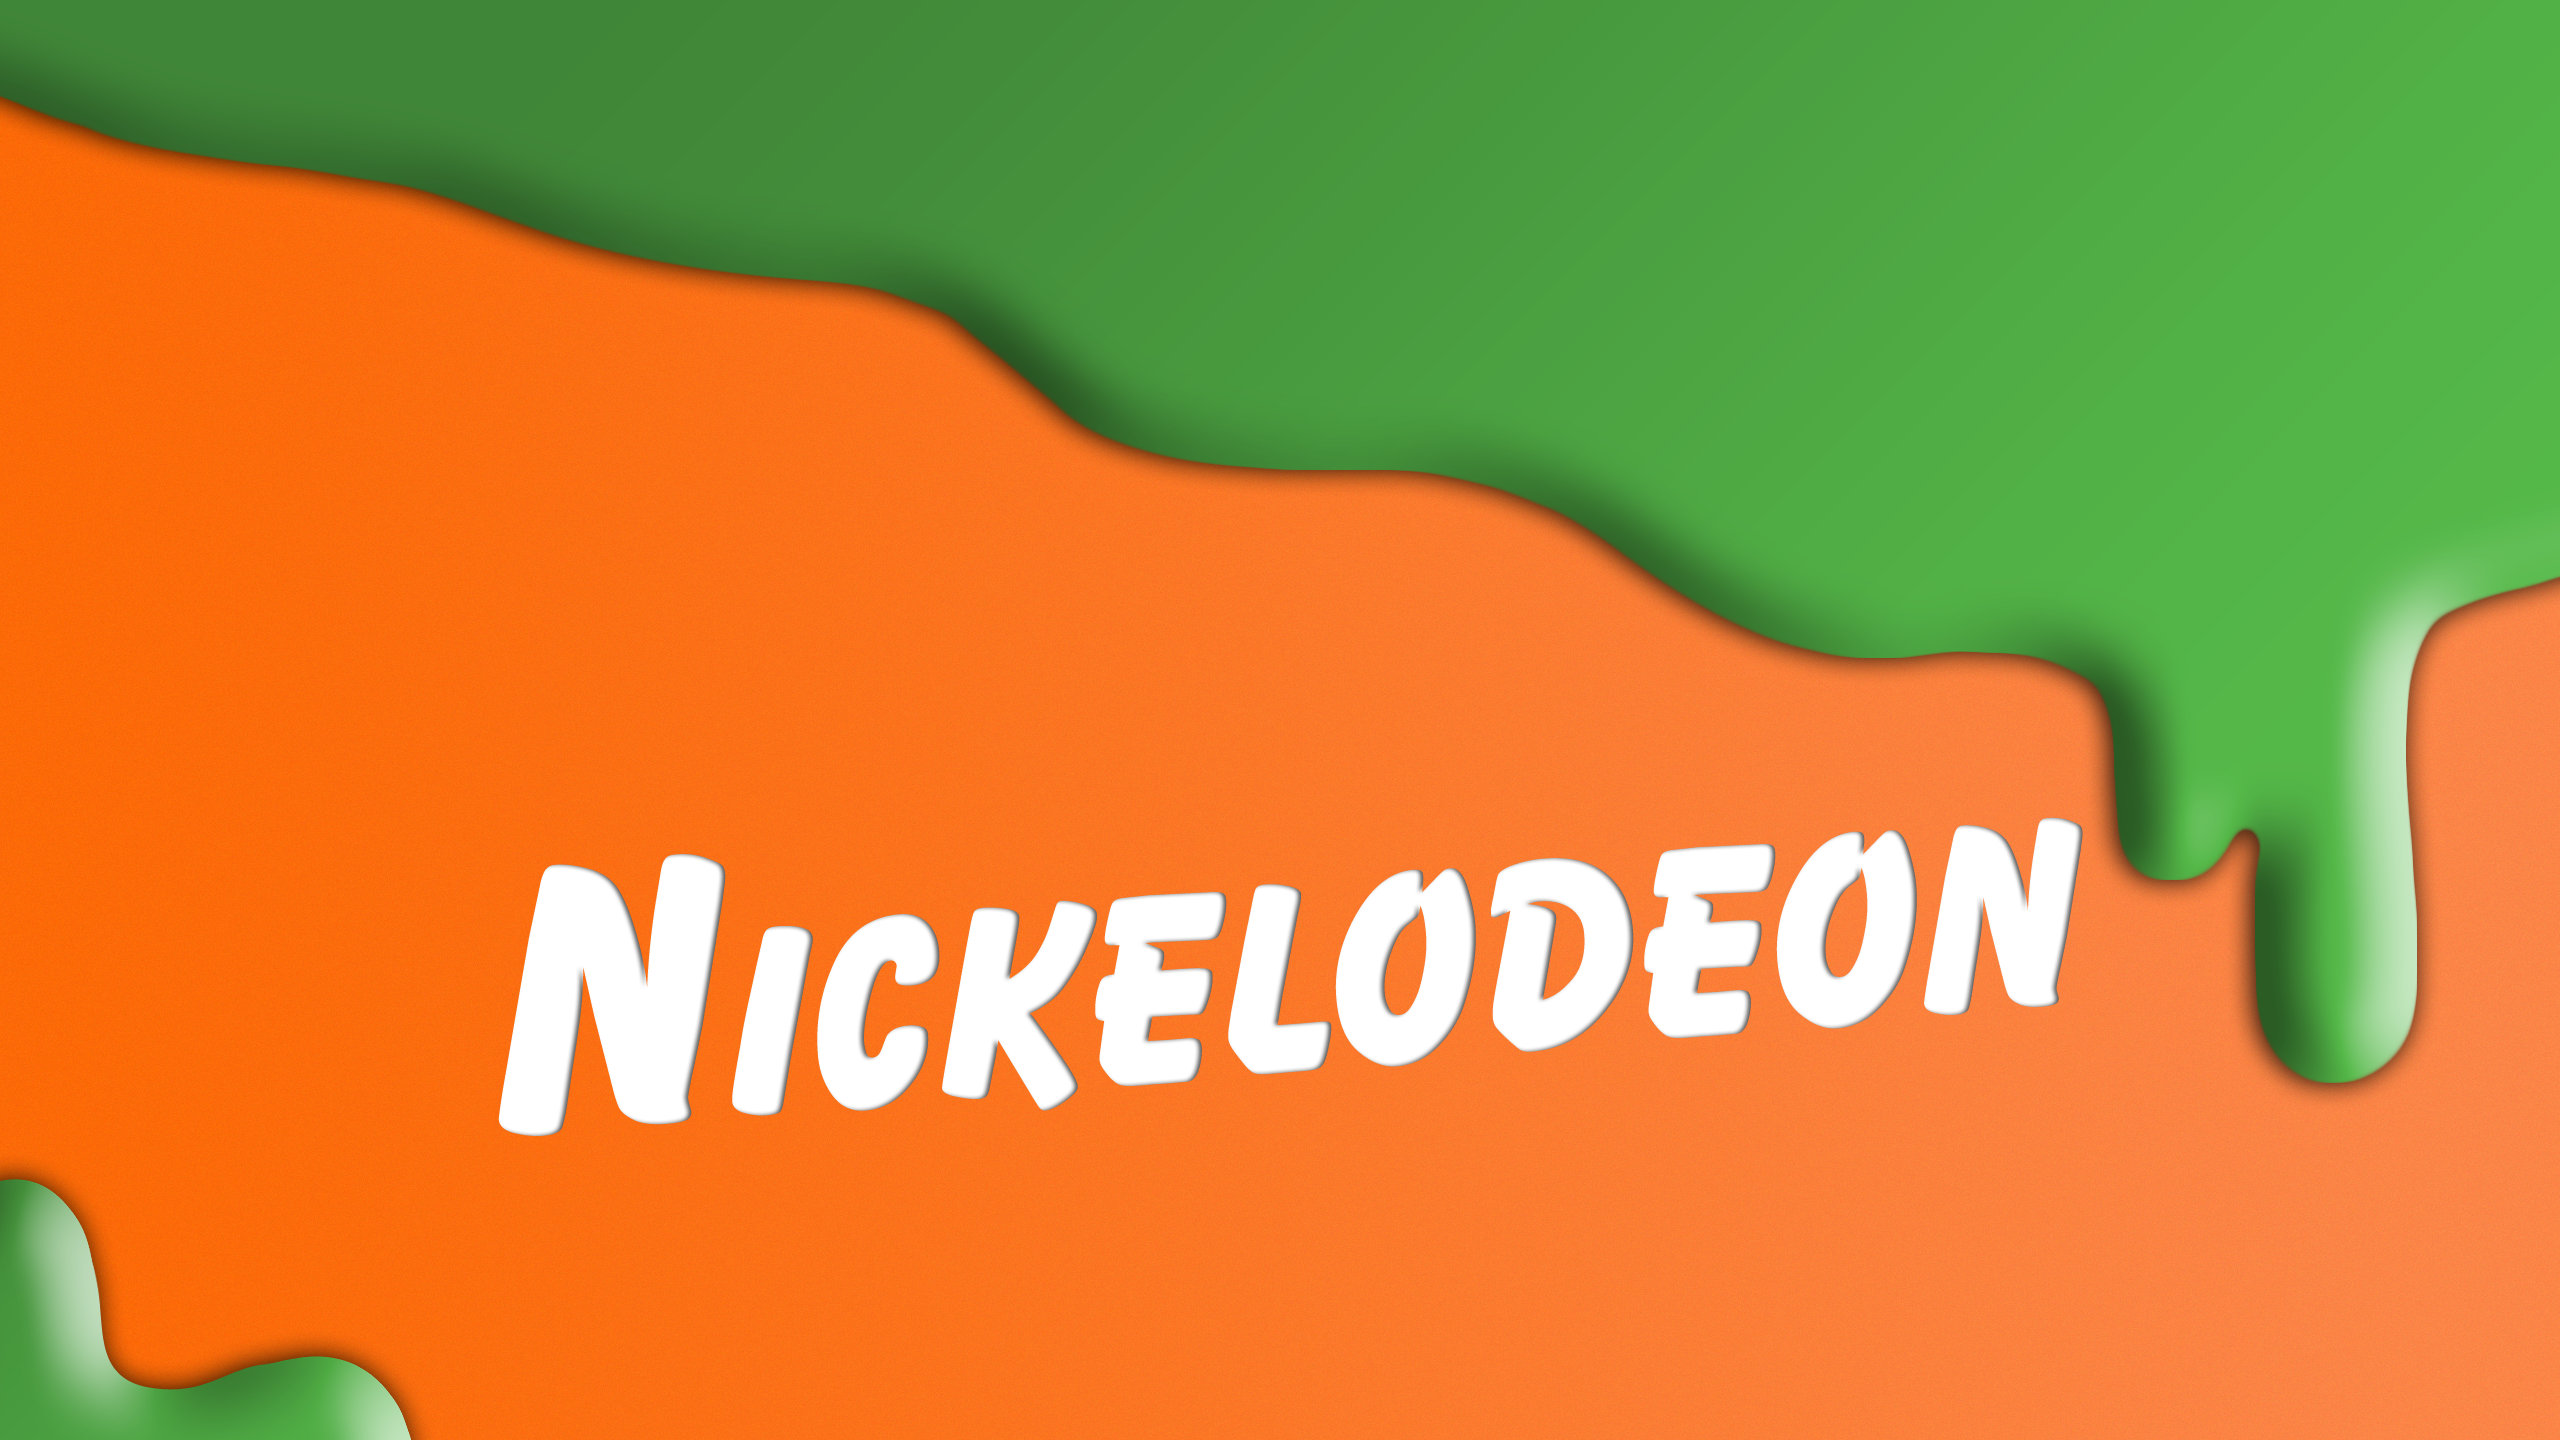 Nickelodeon Wallpaper by ChrisTheNerd Nickelodeon Wallpaper by ChrisTheNerd